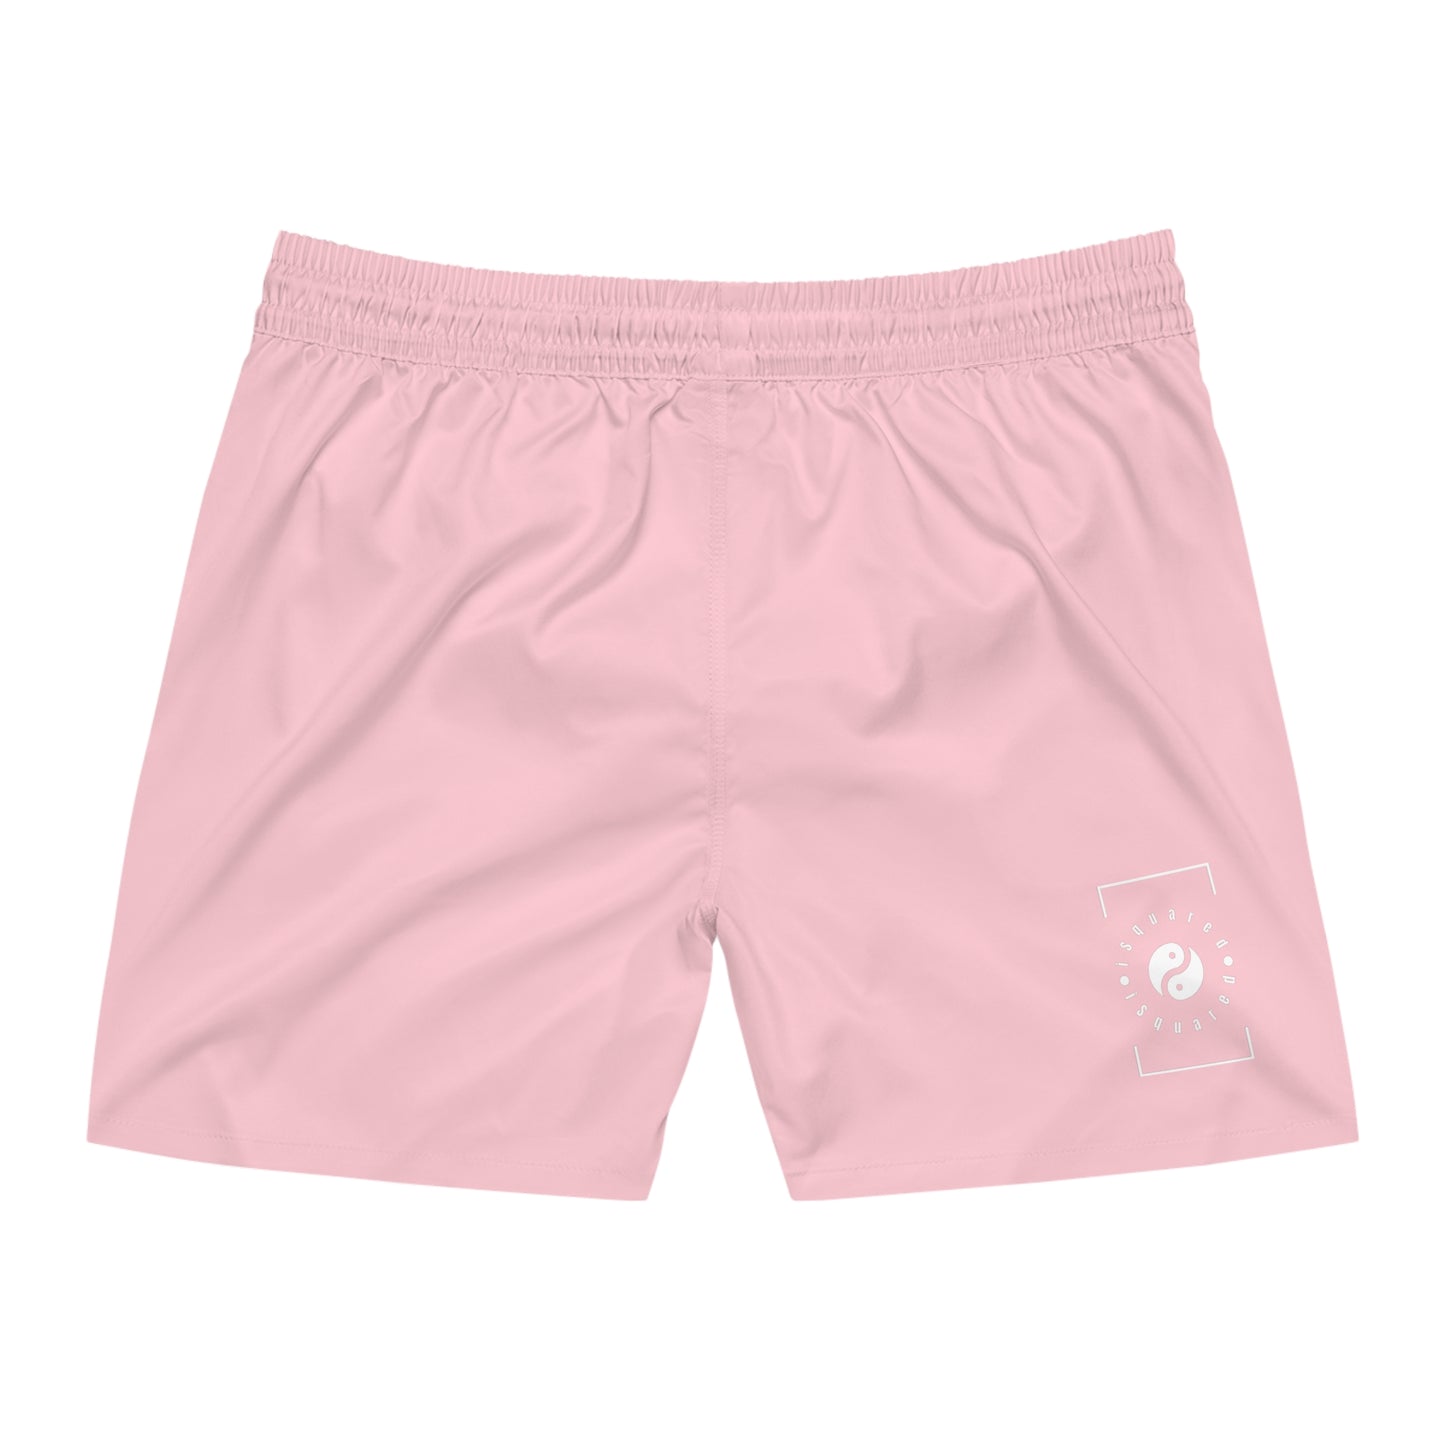 FFCCD4 Light Pink - Swim Shorts (Solid Color) for Men